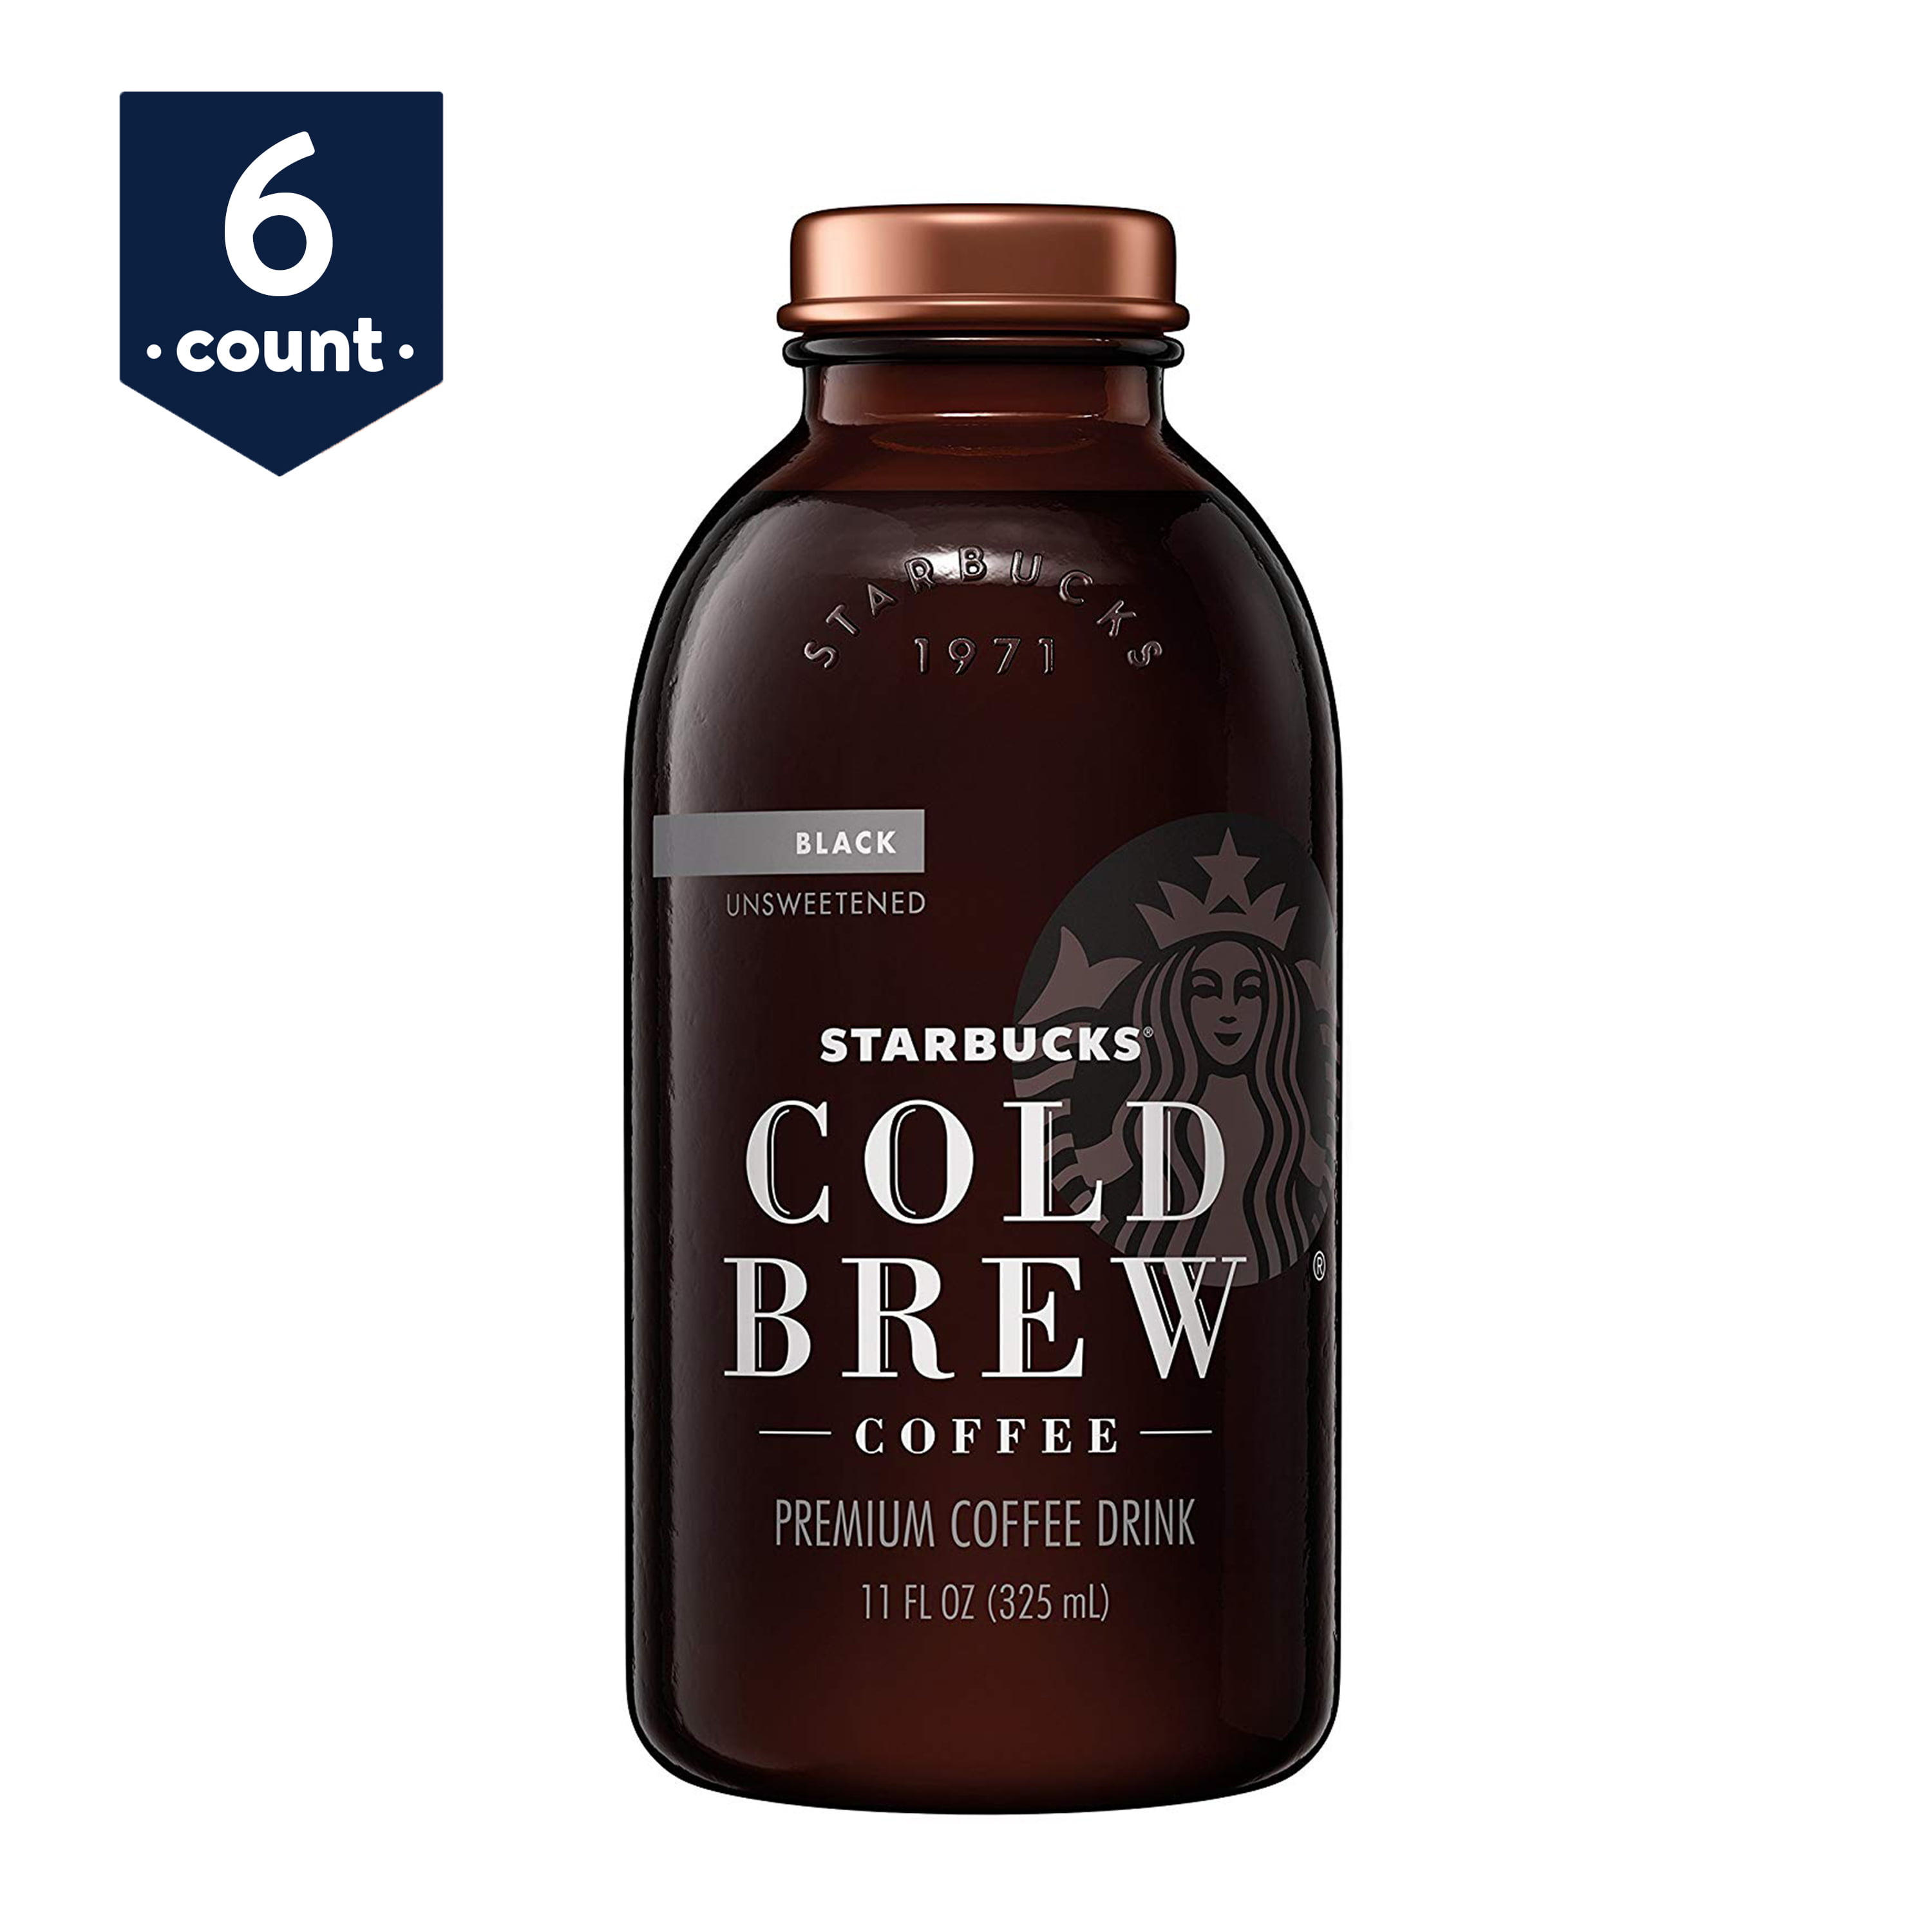 (1 Bottle) Starbucks Cold Brew Coffee, Signature Black MultiServe